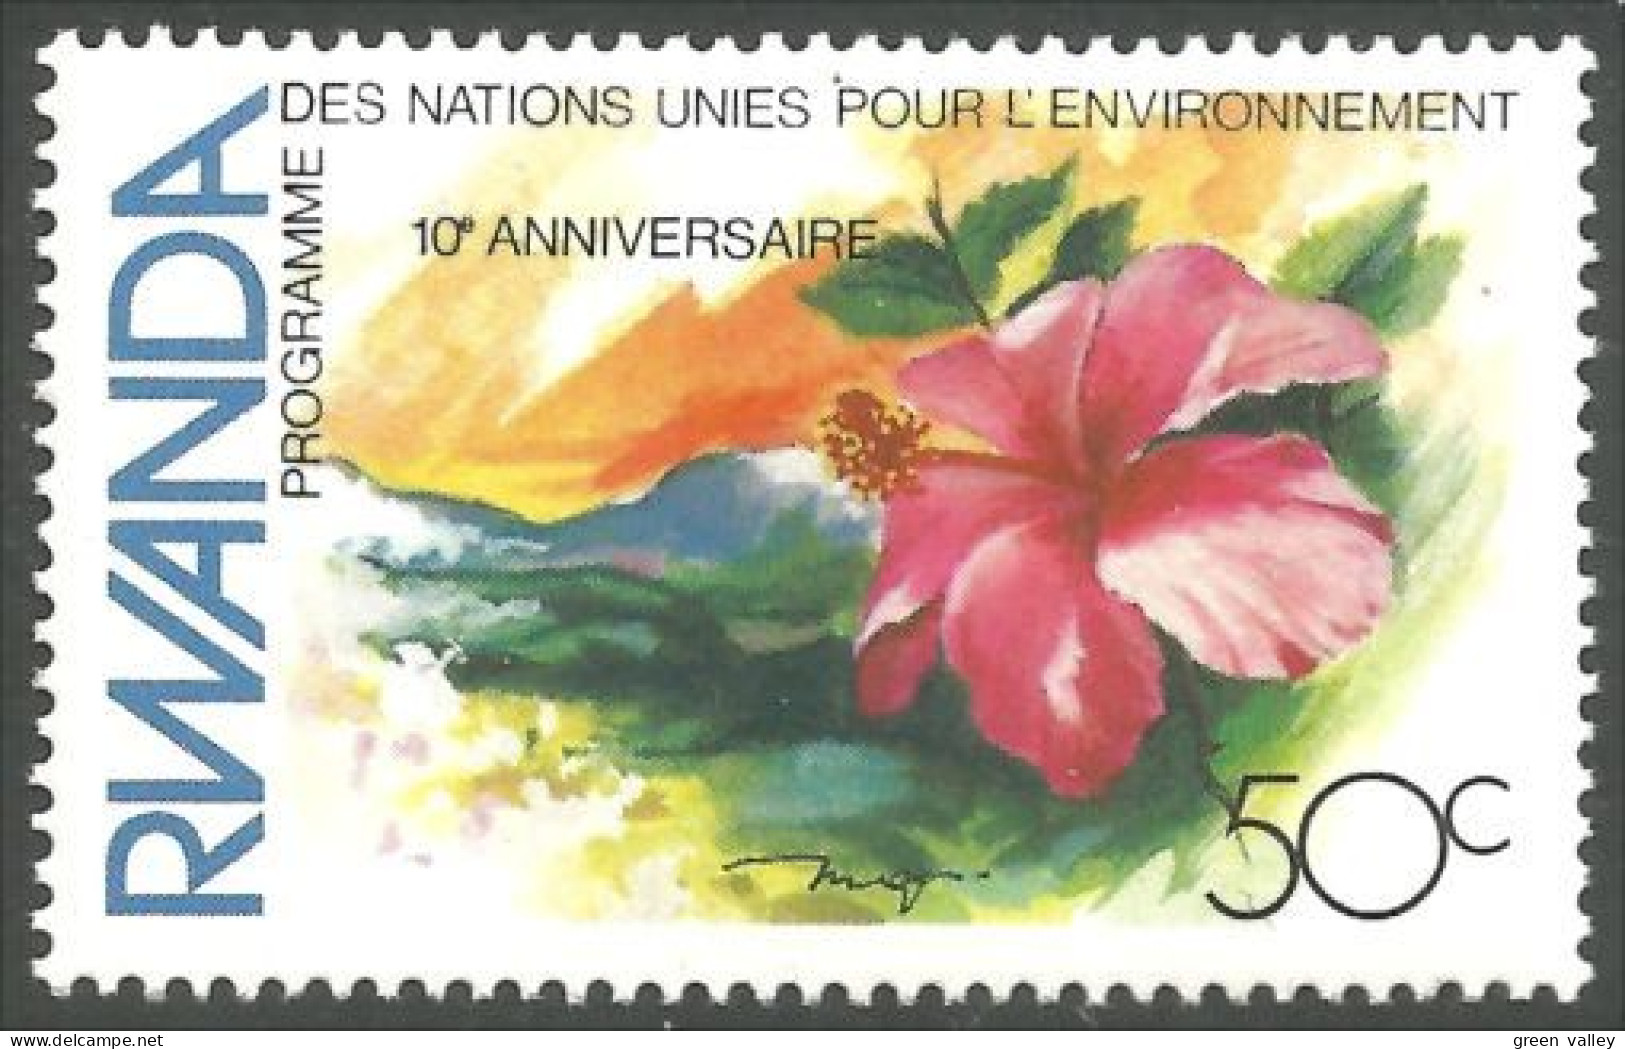 777 Rwanda Fleur Flower Blume Environnement Environment MNH ** Neuf SC (RWA-286) - Unused Stamps